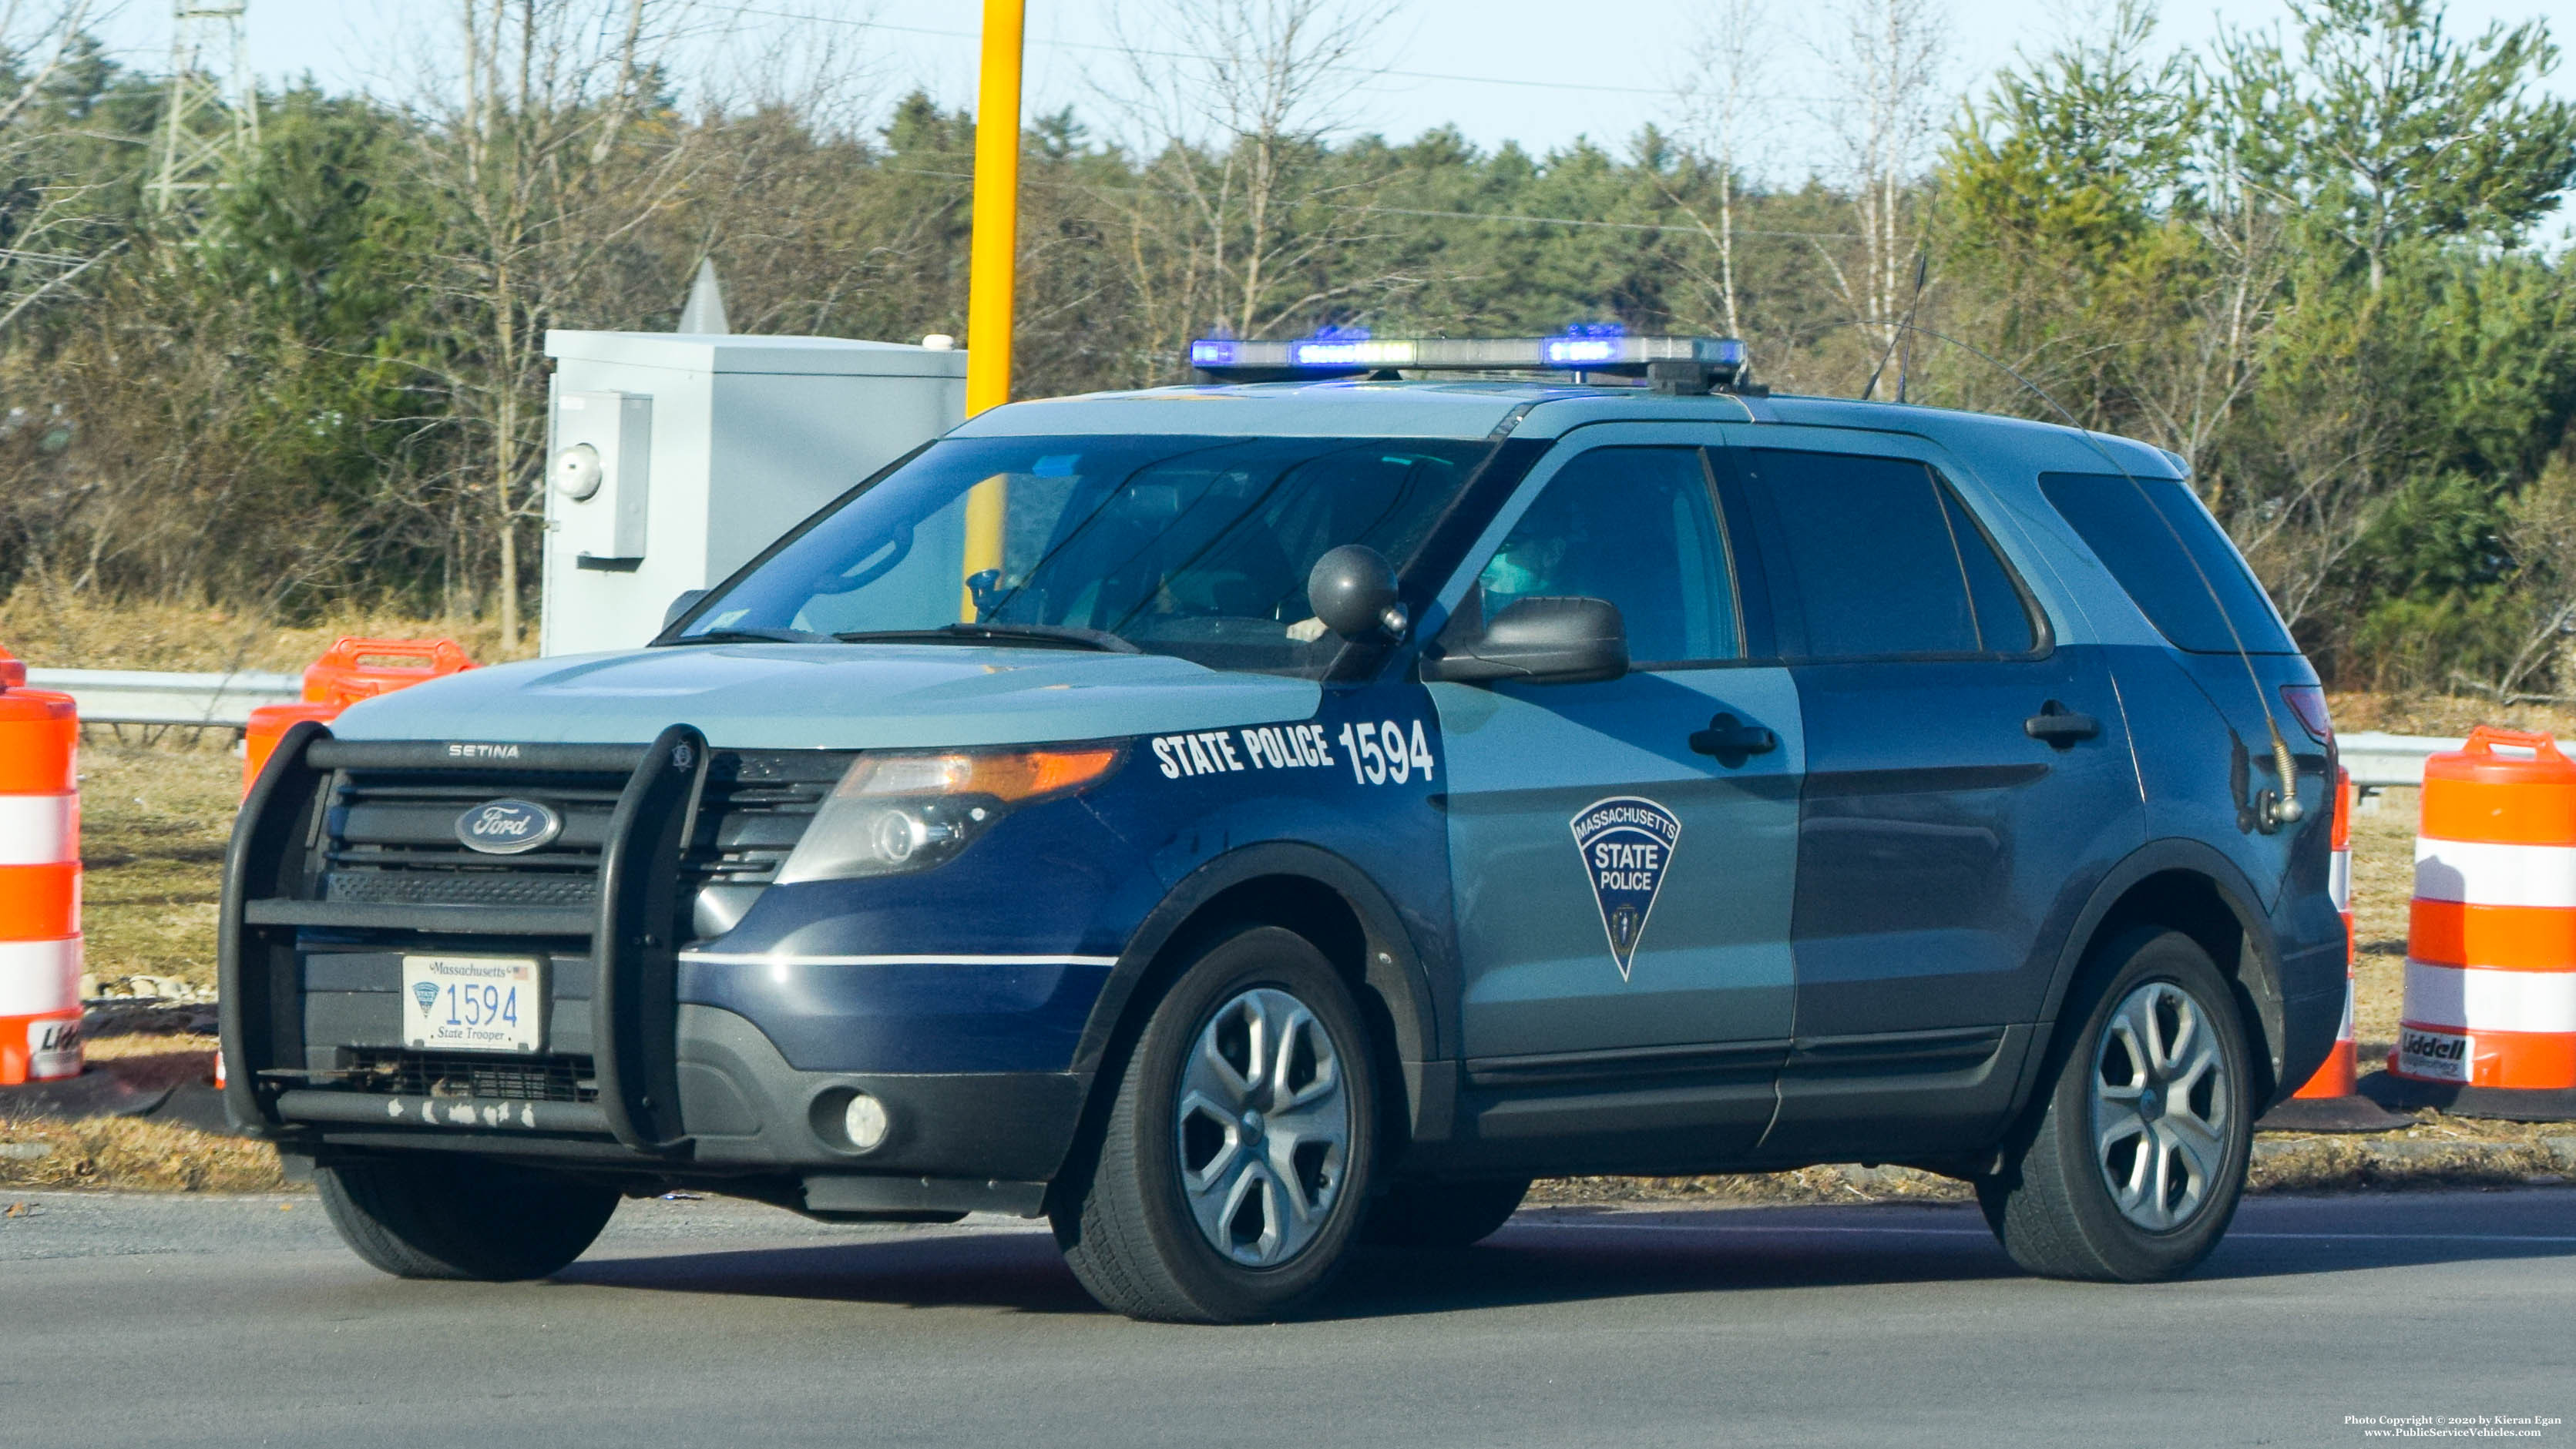 A photo  of Massachusetts State Police
            Cruiser 1594, a 2013 Ford Police Interceptor Utility             taken by Kieran Egan